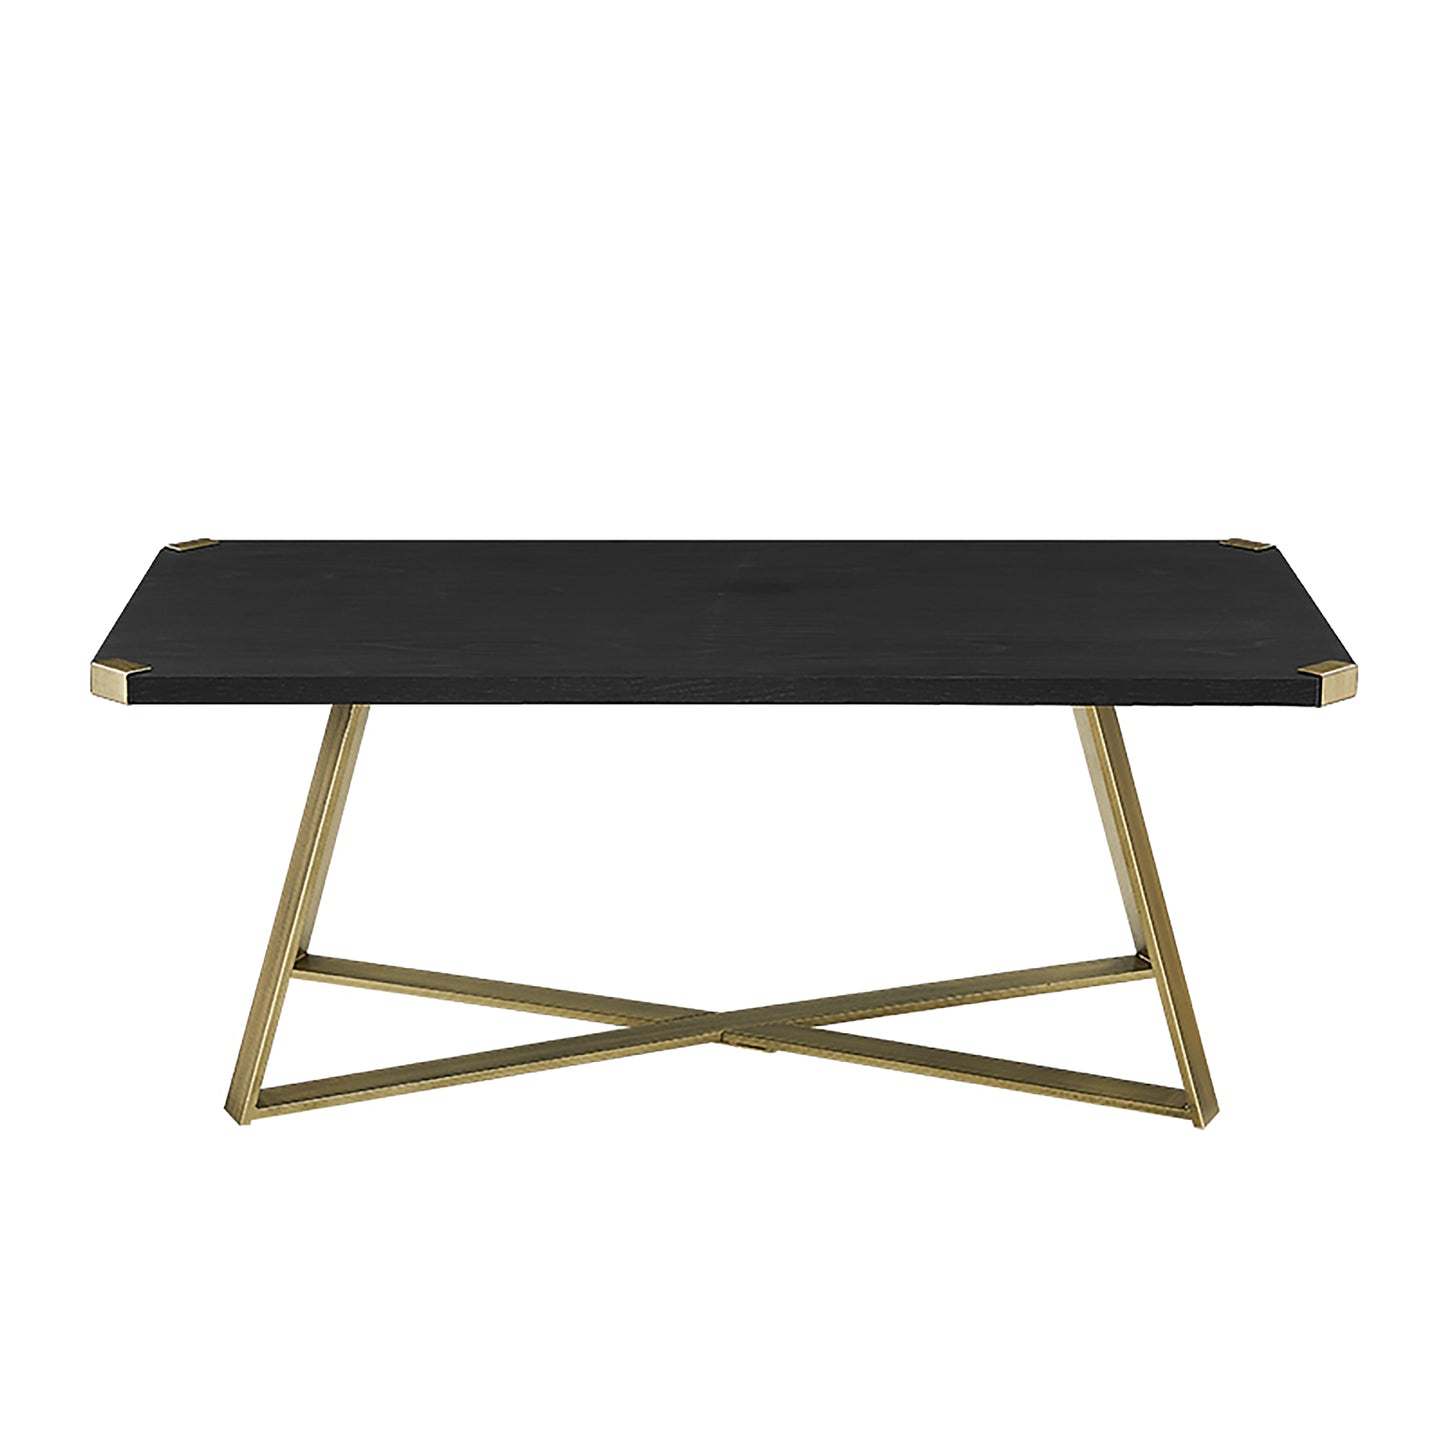 Criterion Capri Coffee Table 1100mm Rectangular Table, Gold Metal Leg and Metal Highlights Black Oak